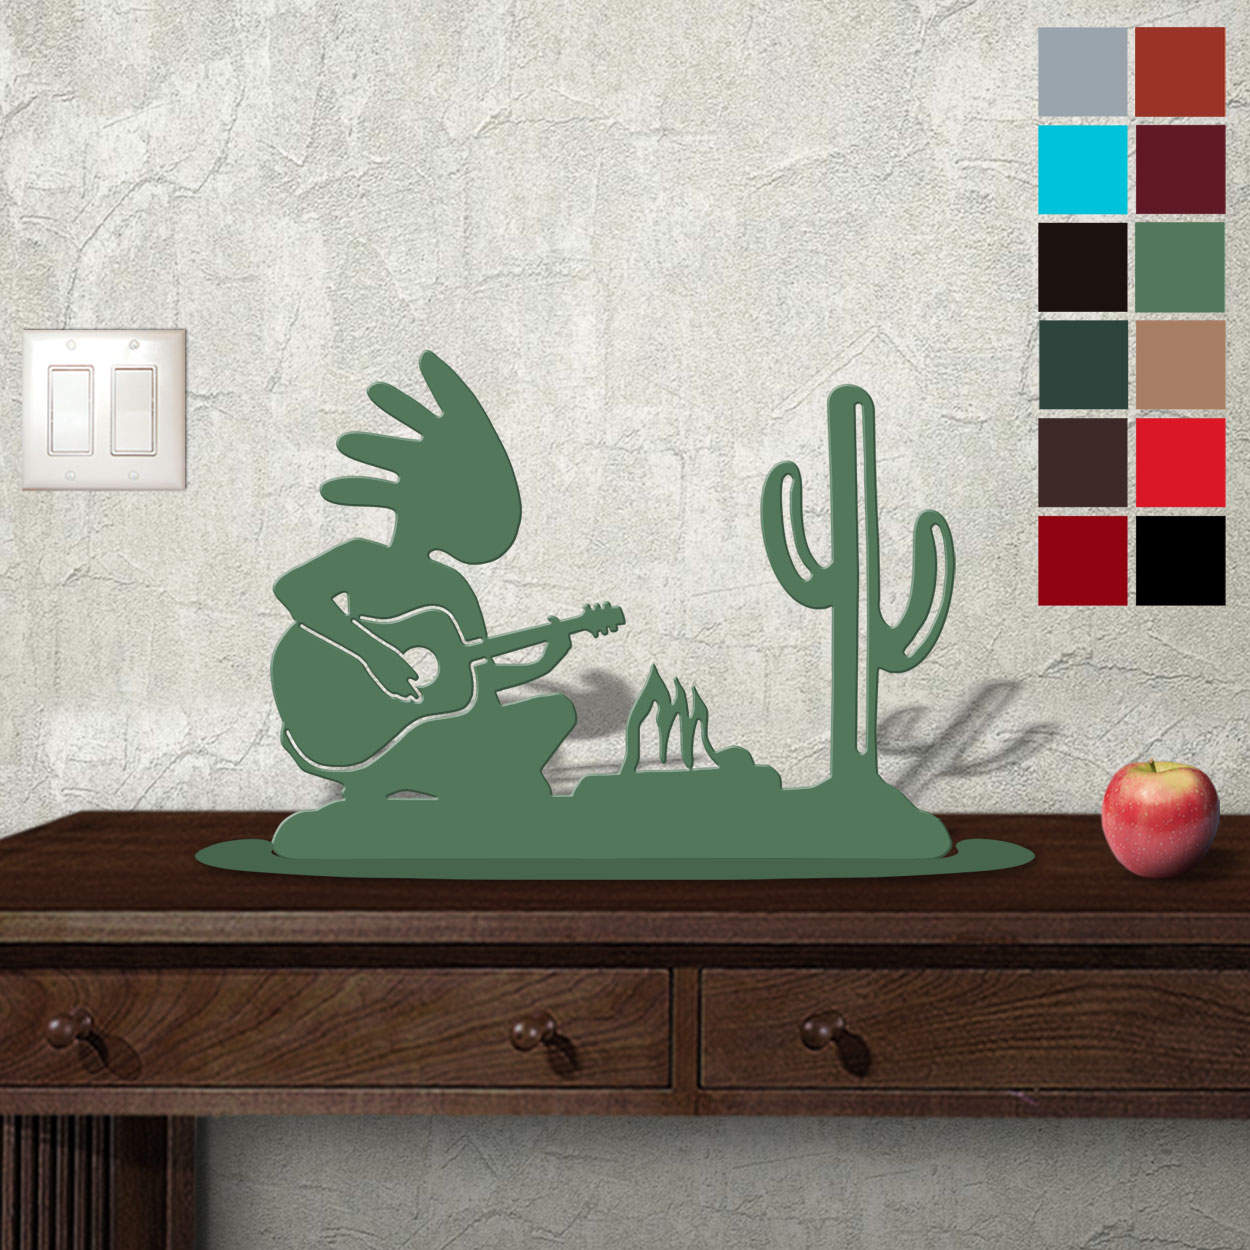 623021 - Tabletop Metal Sculpture - 20in W x 15in H - Cactus Camper - Choose Color